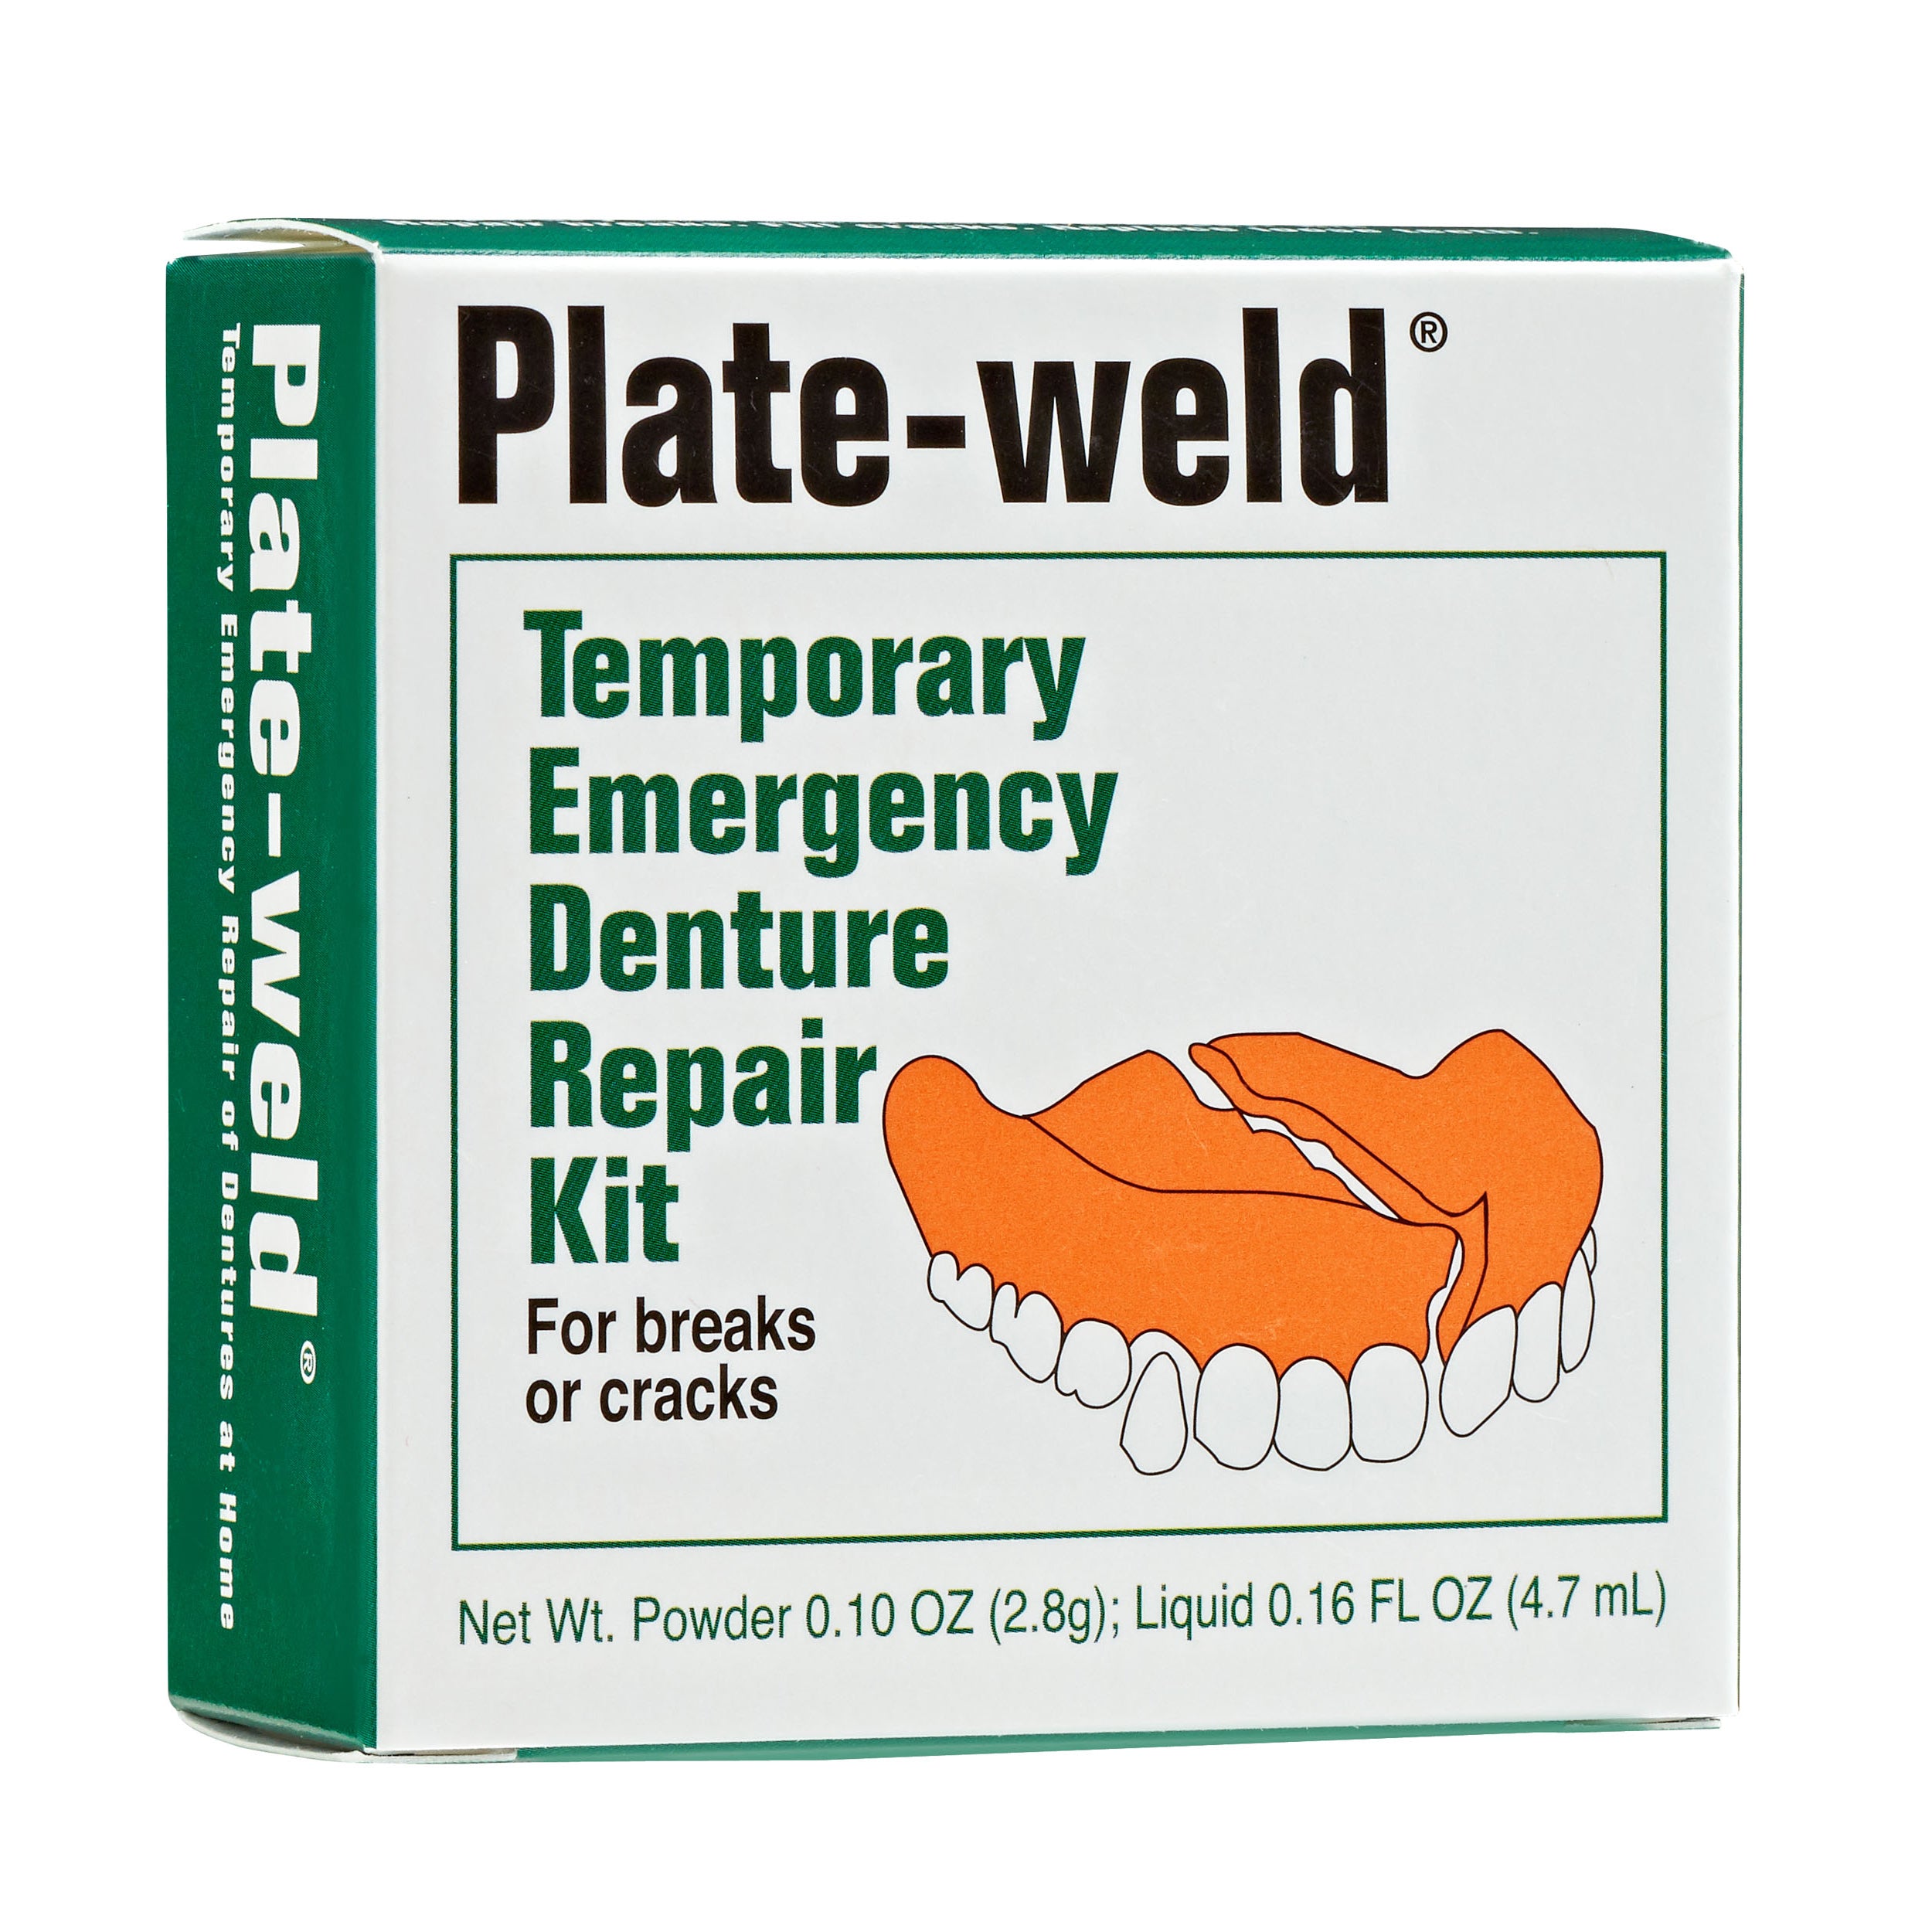 Plate-weld